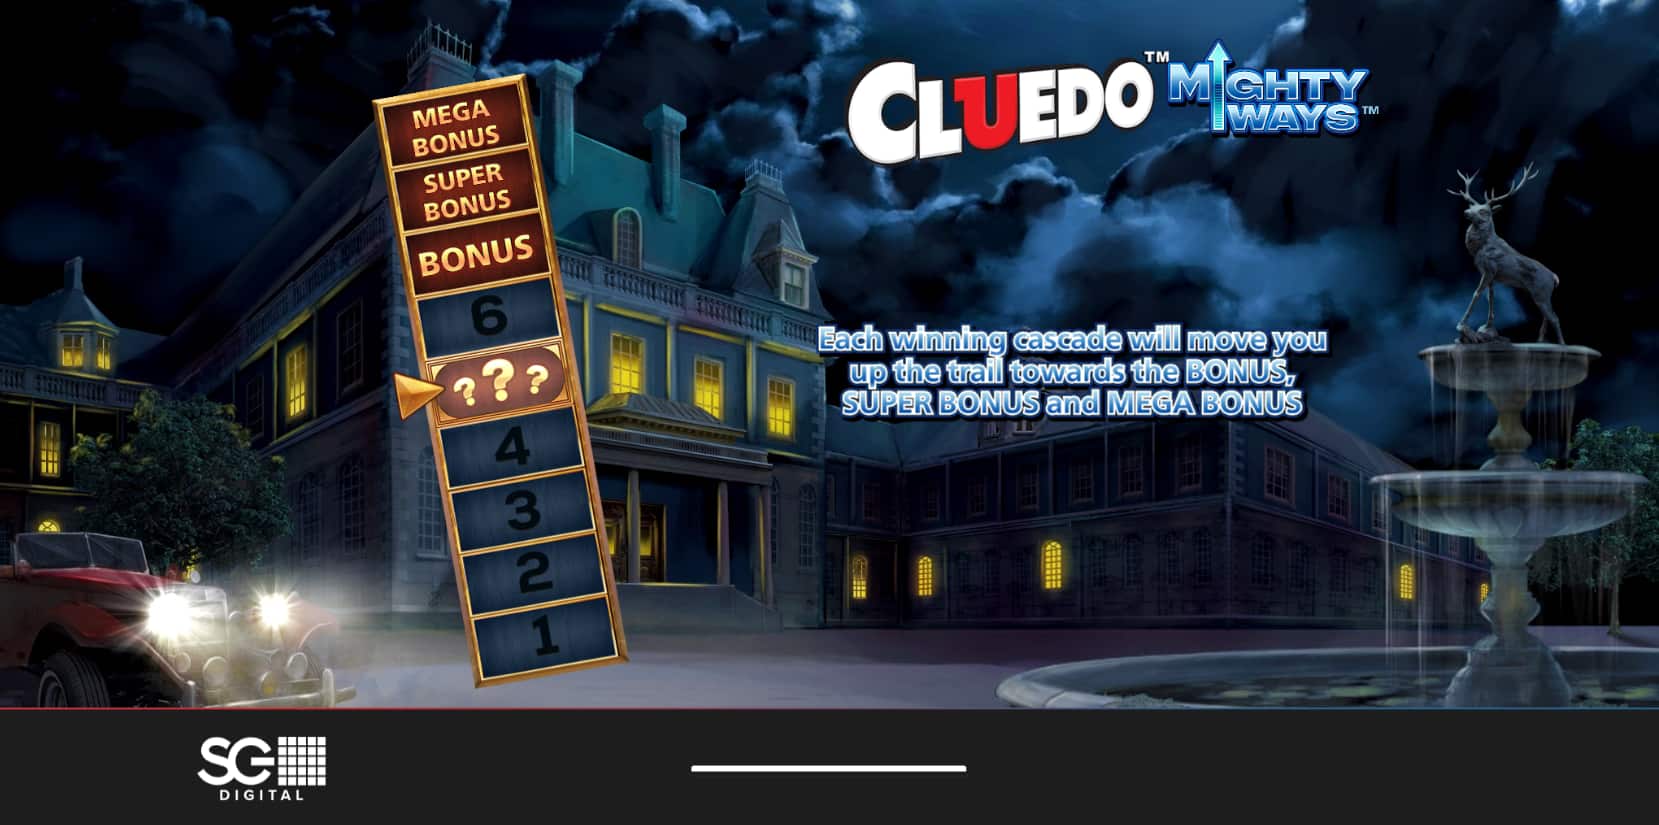 cluedo mighty ways slot